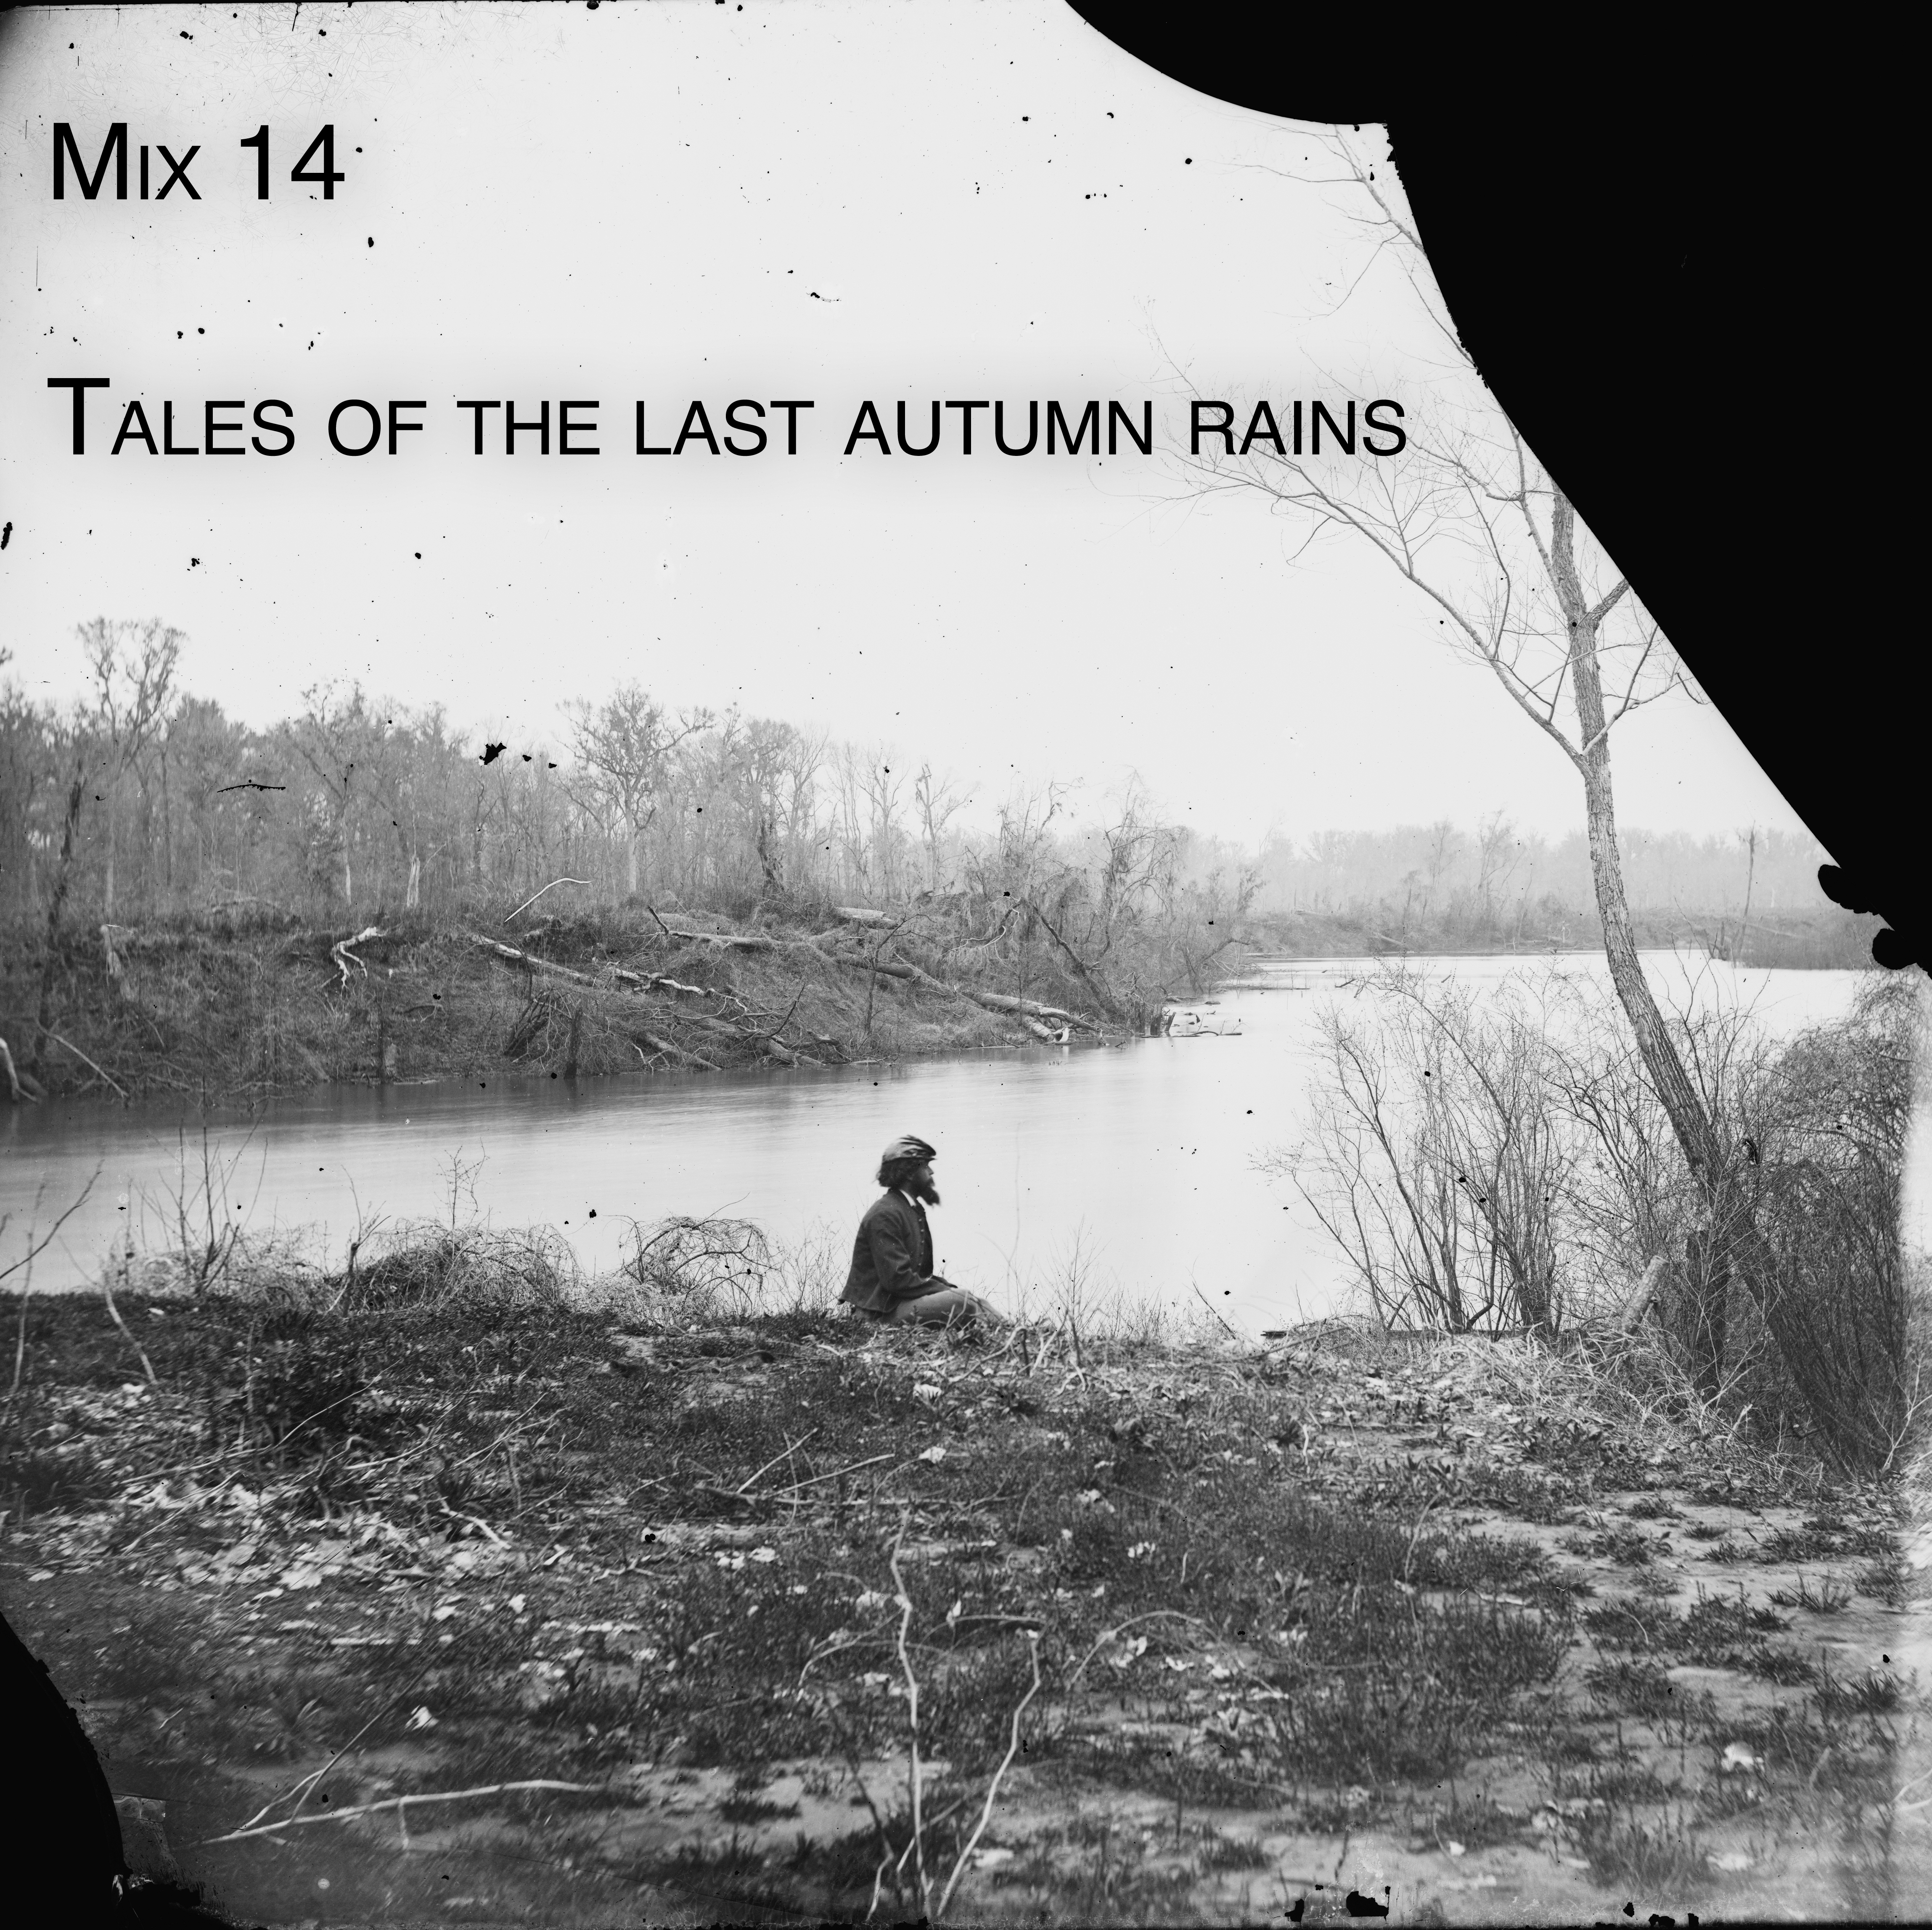 Mix 14 – Tales of the last autumn rains